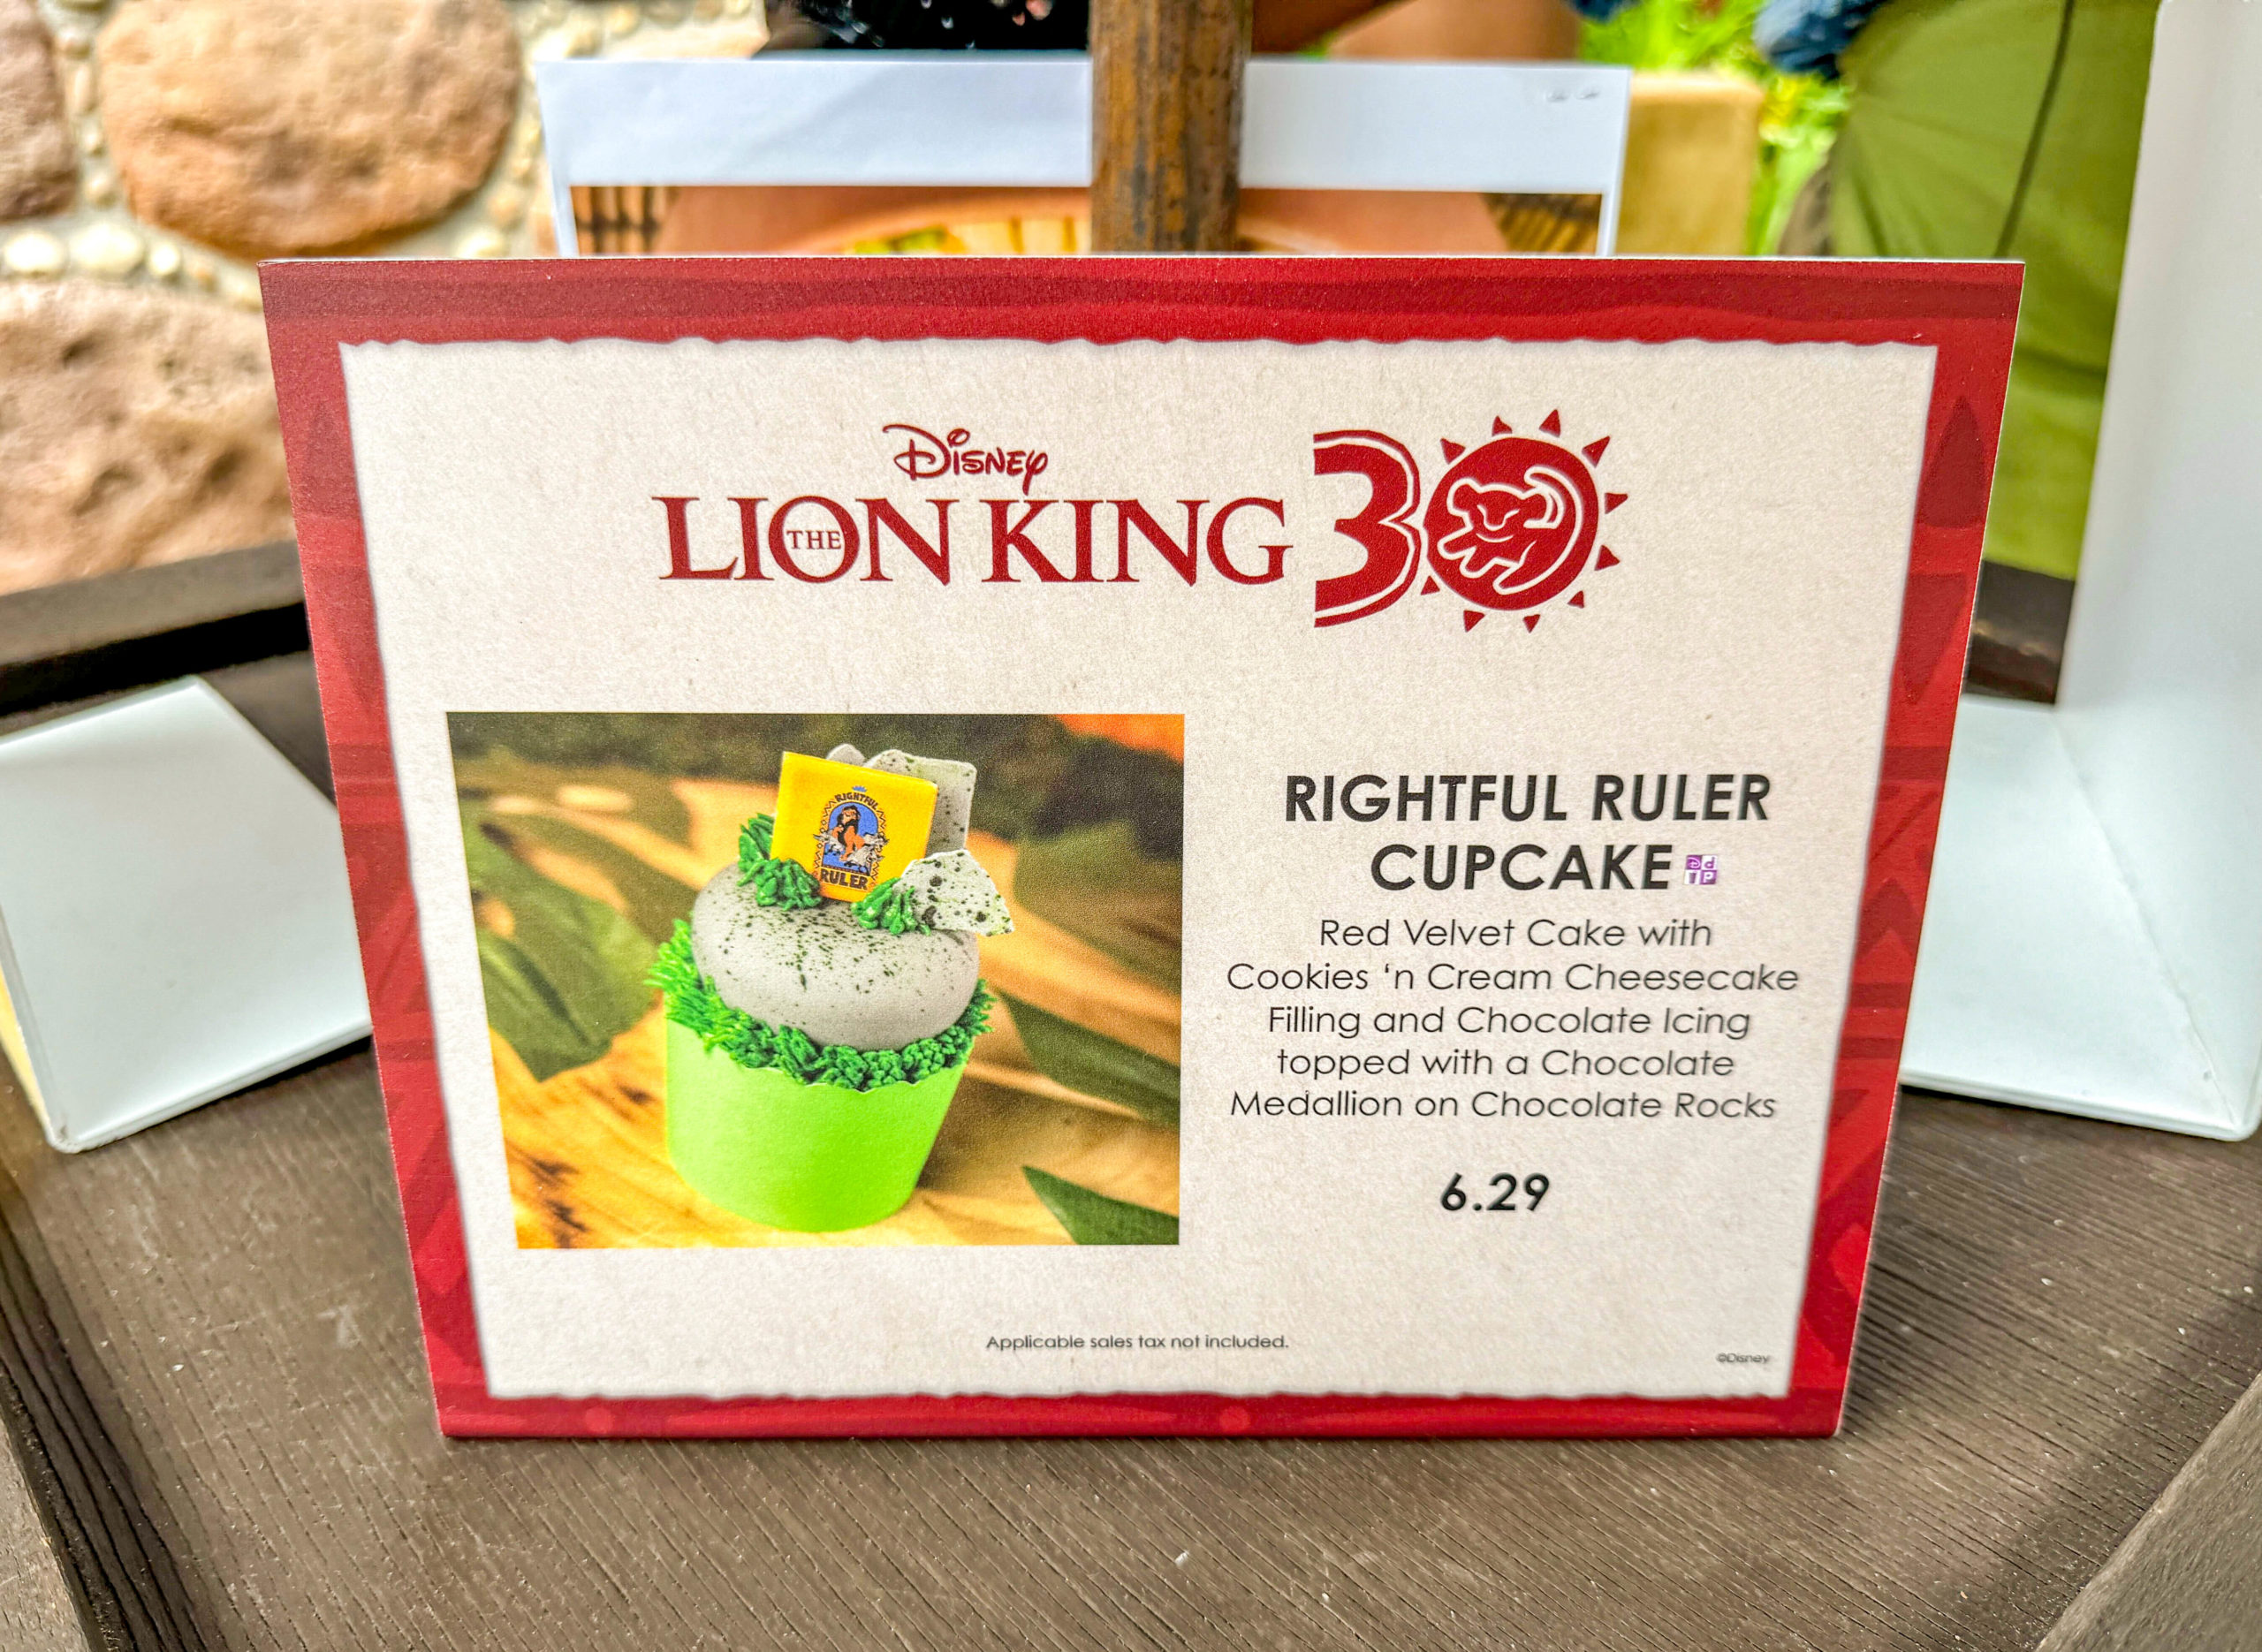 Rightful Ruler Cupcake